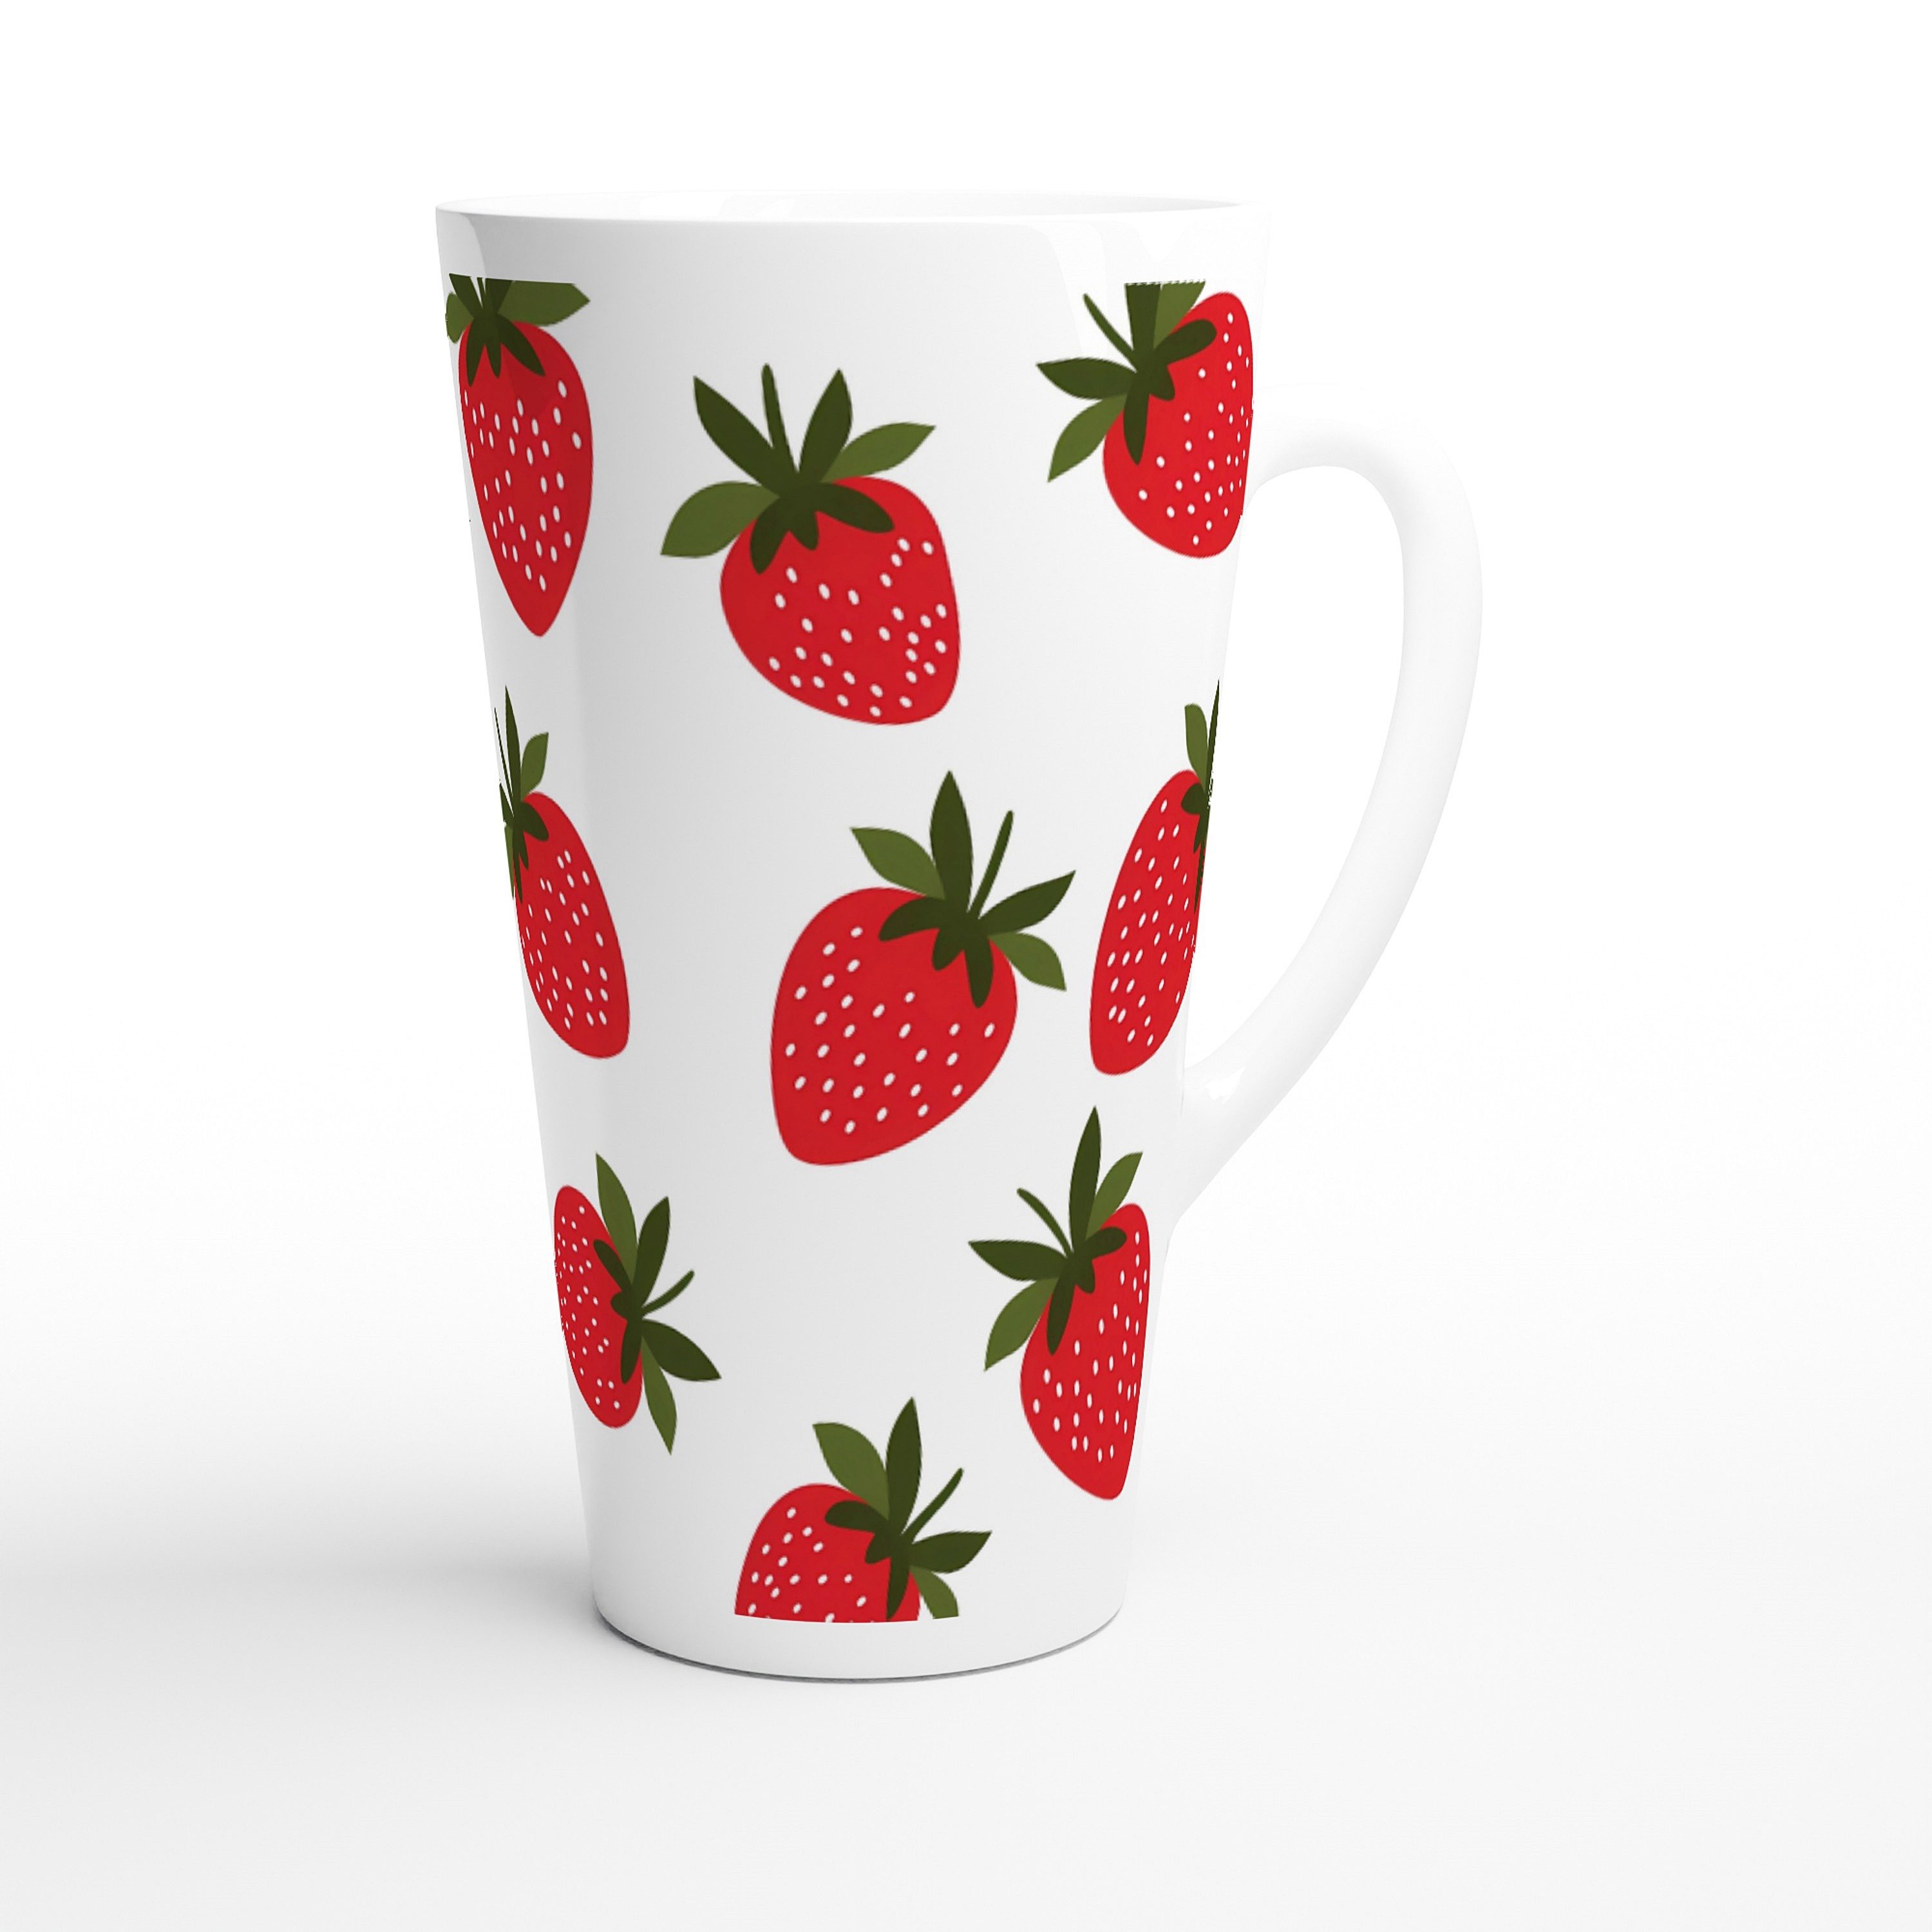 Alltagszauber Latte-Macchiato-Tasse Jumbo-Tasse ERDBEERE, Keramik, extra groß, für 500ml Inhalt